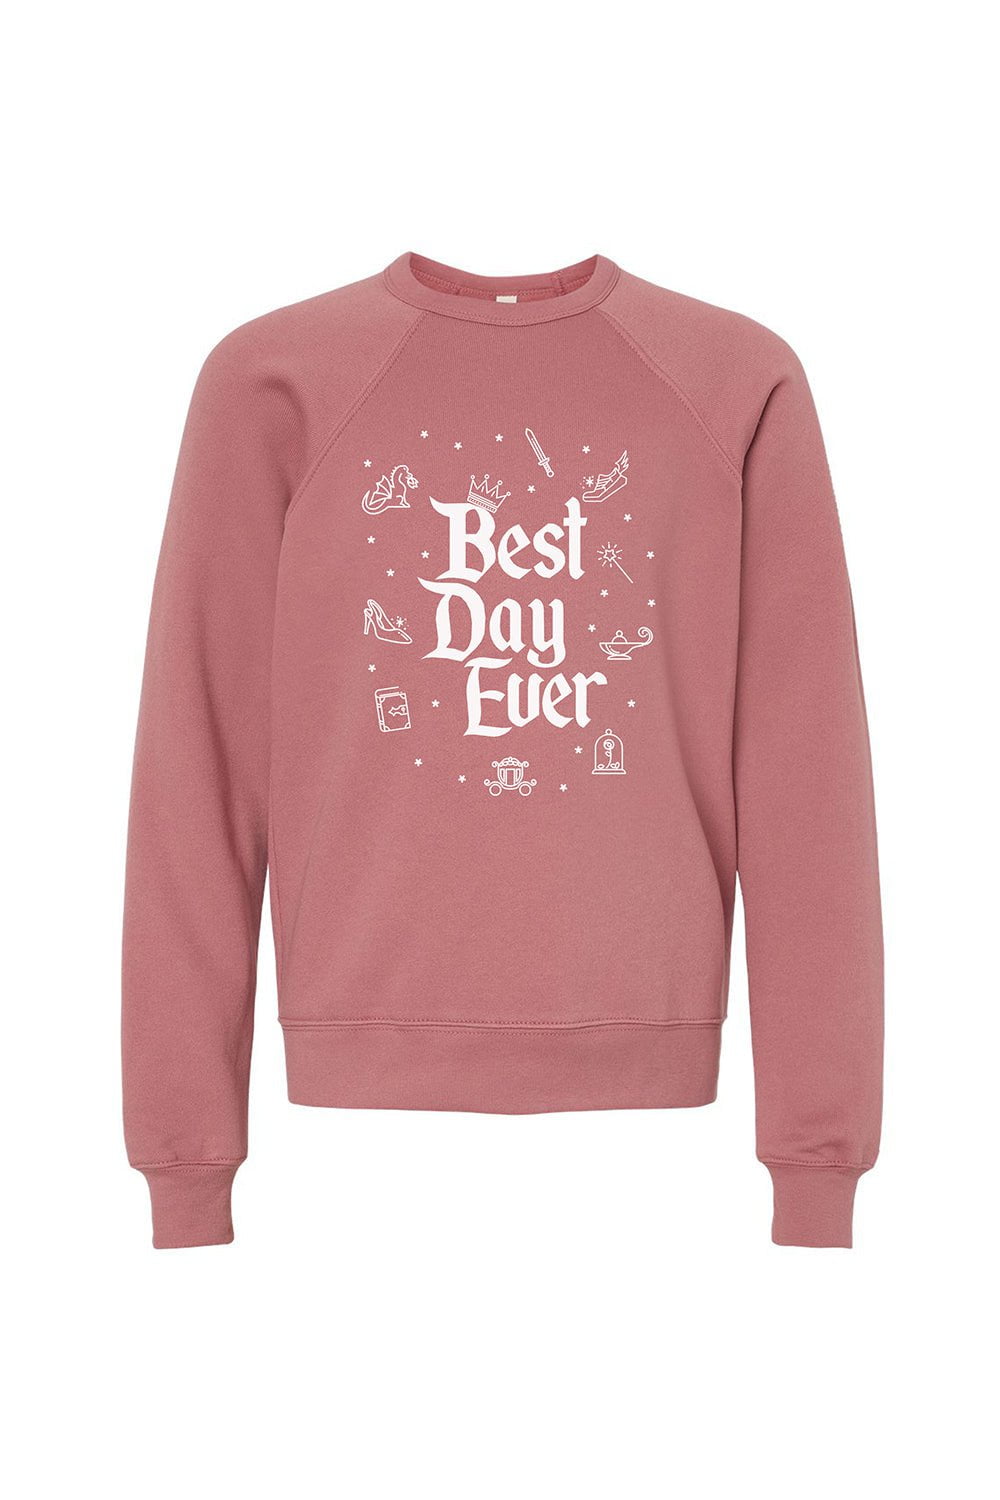 Sarah Marie Design Studio Sweatshirt Best Day Ever Youth Sweatshirt